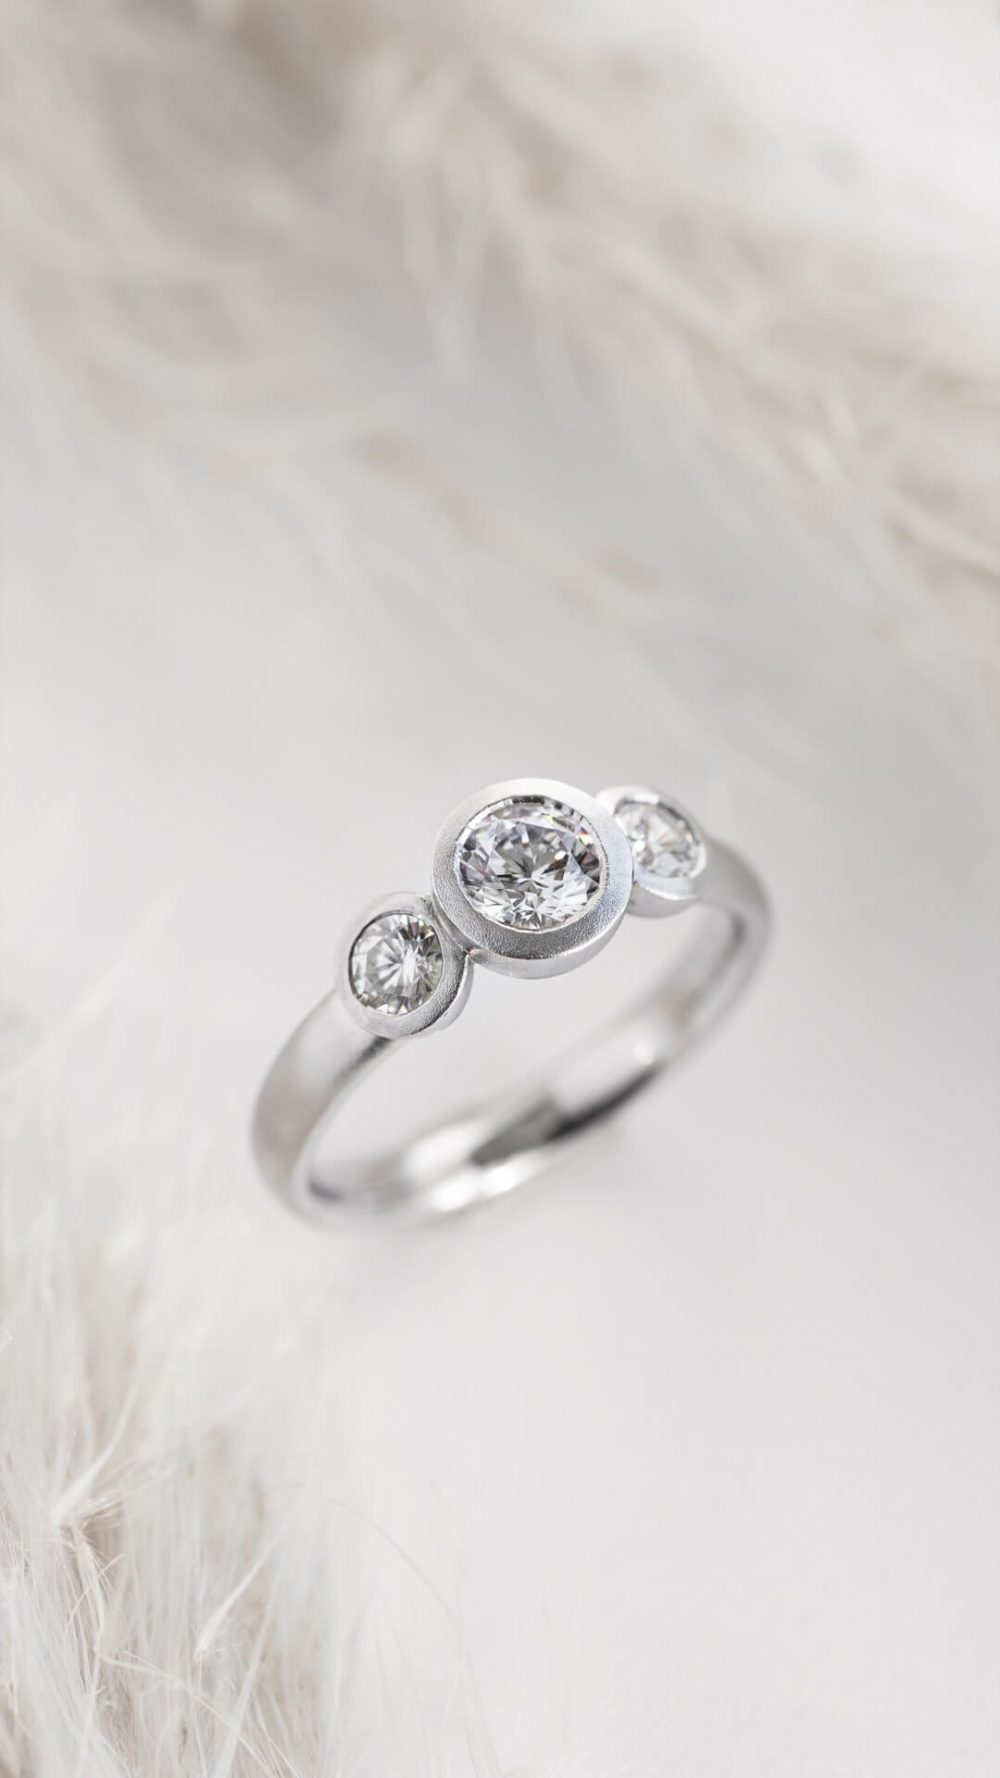 Grand Diamond Trilogy Engagement Ring By Bristol Jeweller Jacks Turner.